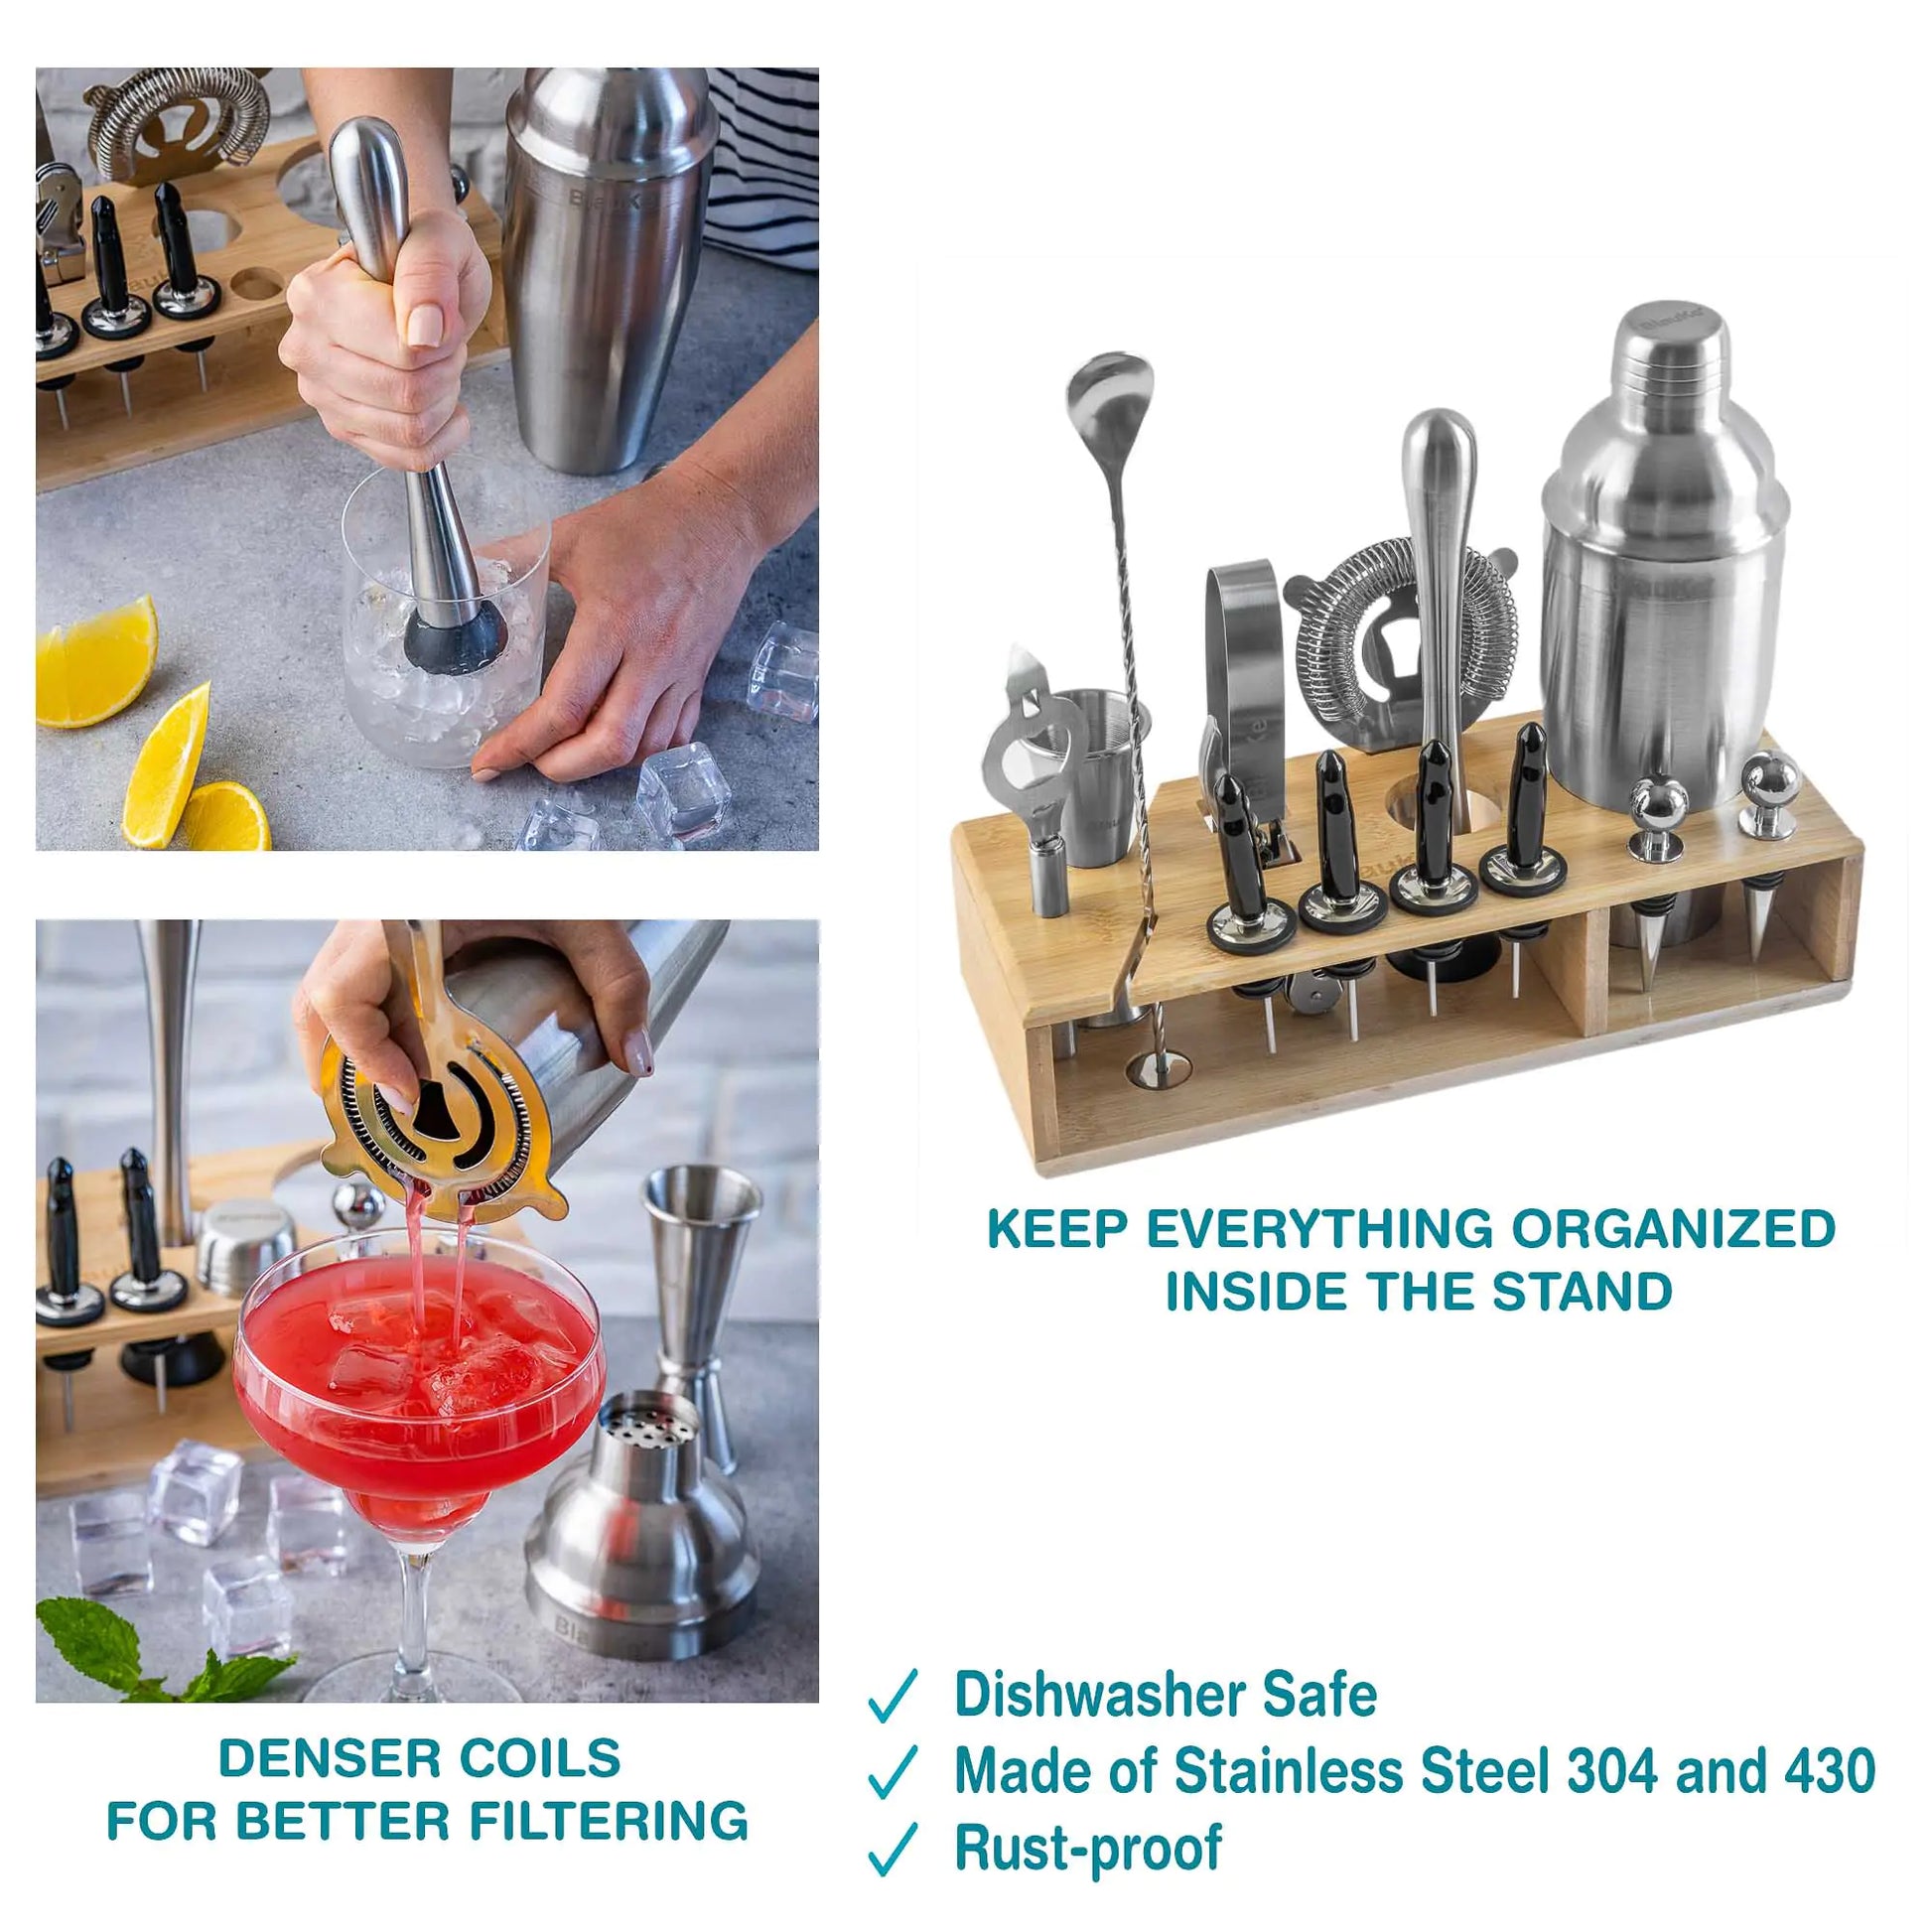 Stainless Steel Cocktail Shaker Set with Stand - 17-Piece Mixology Bartender Kit, Bar Set - 25oz Martini Shaker, Jigger, Strainer, Muddler, Mixing Spoon - BlissfulBasic